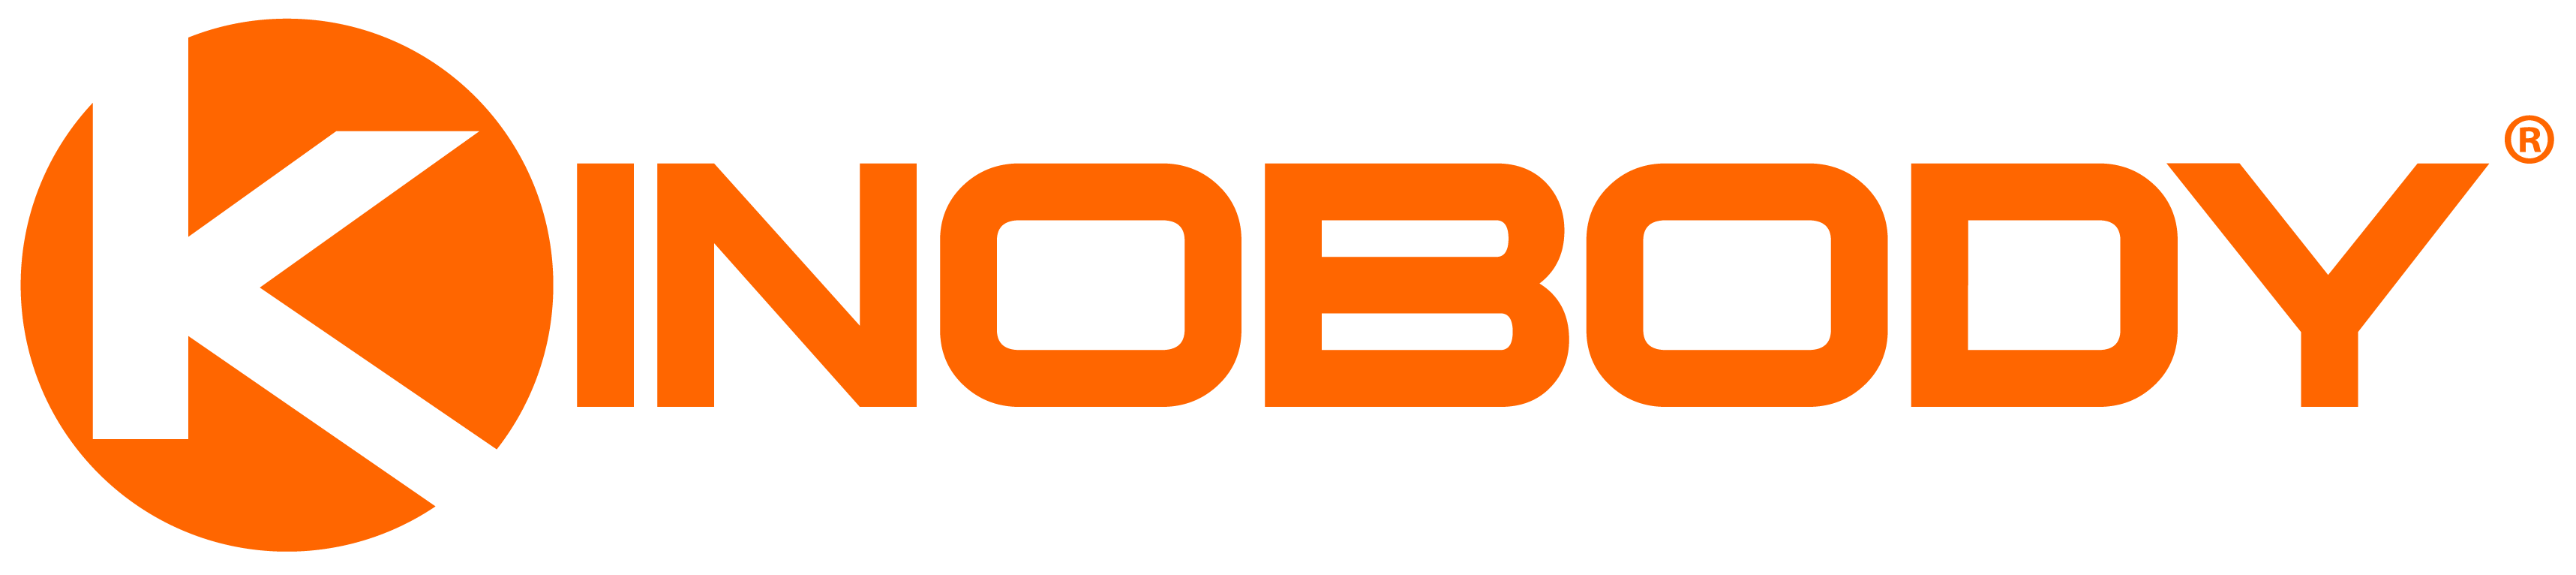 Orange Boxy R Logo - Kinobody Fitness. Kinobody Fitness Systems